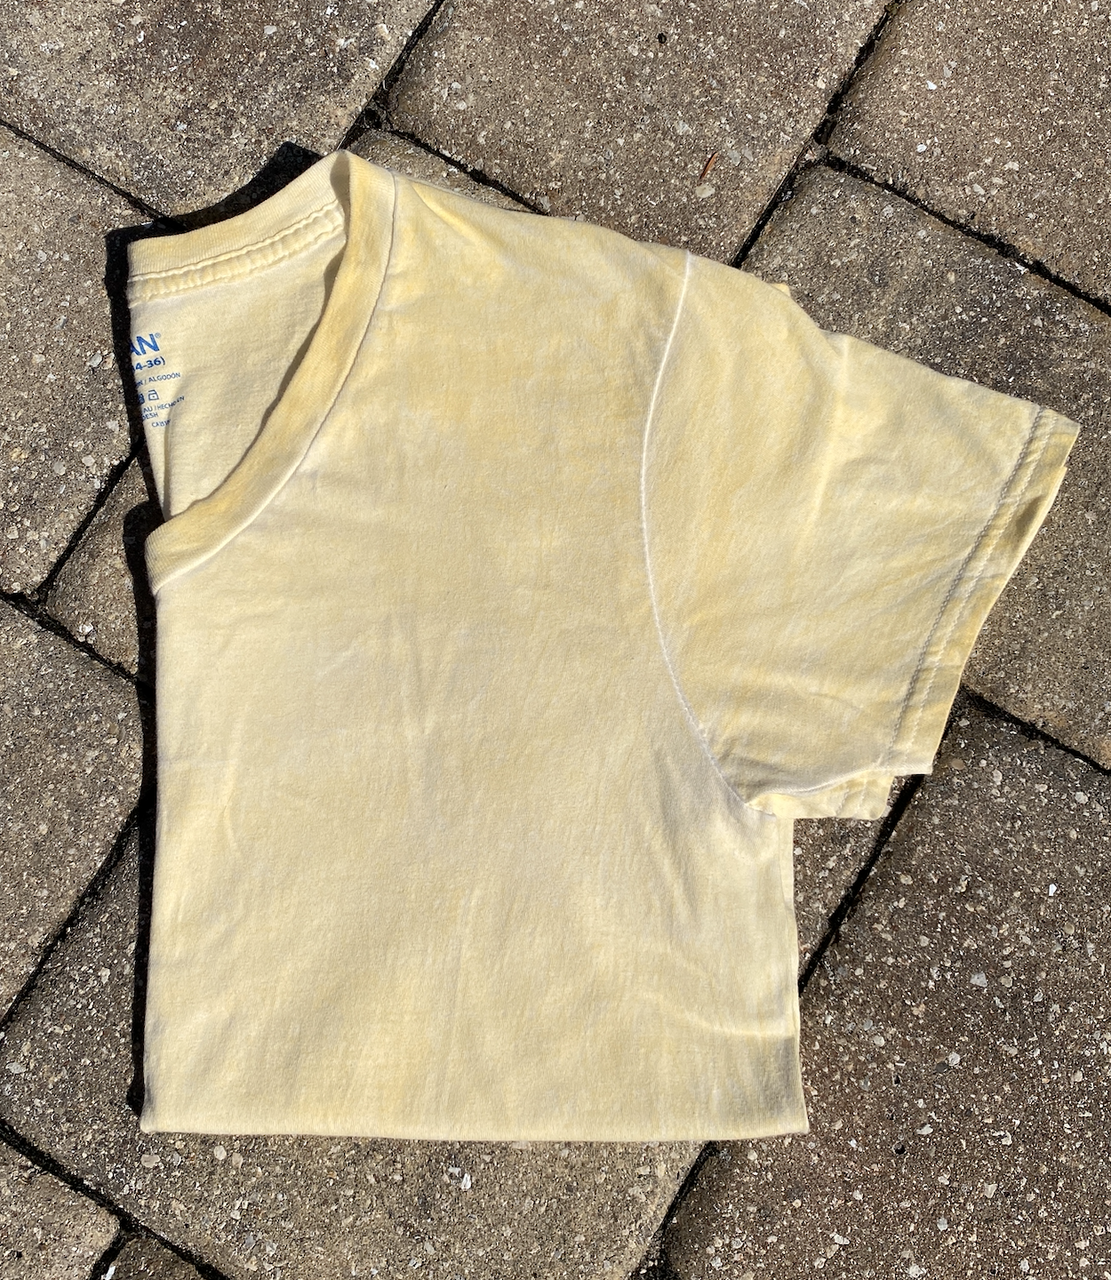 Hue Chromic® Solar Fabric Dye - Colorless to Orange